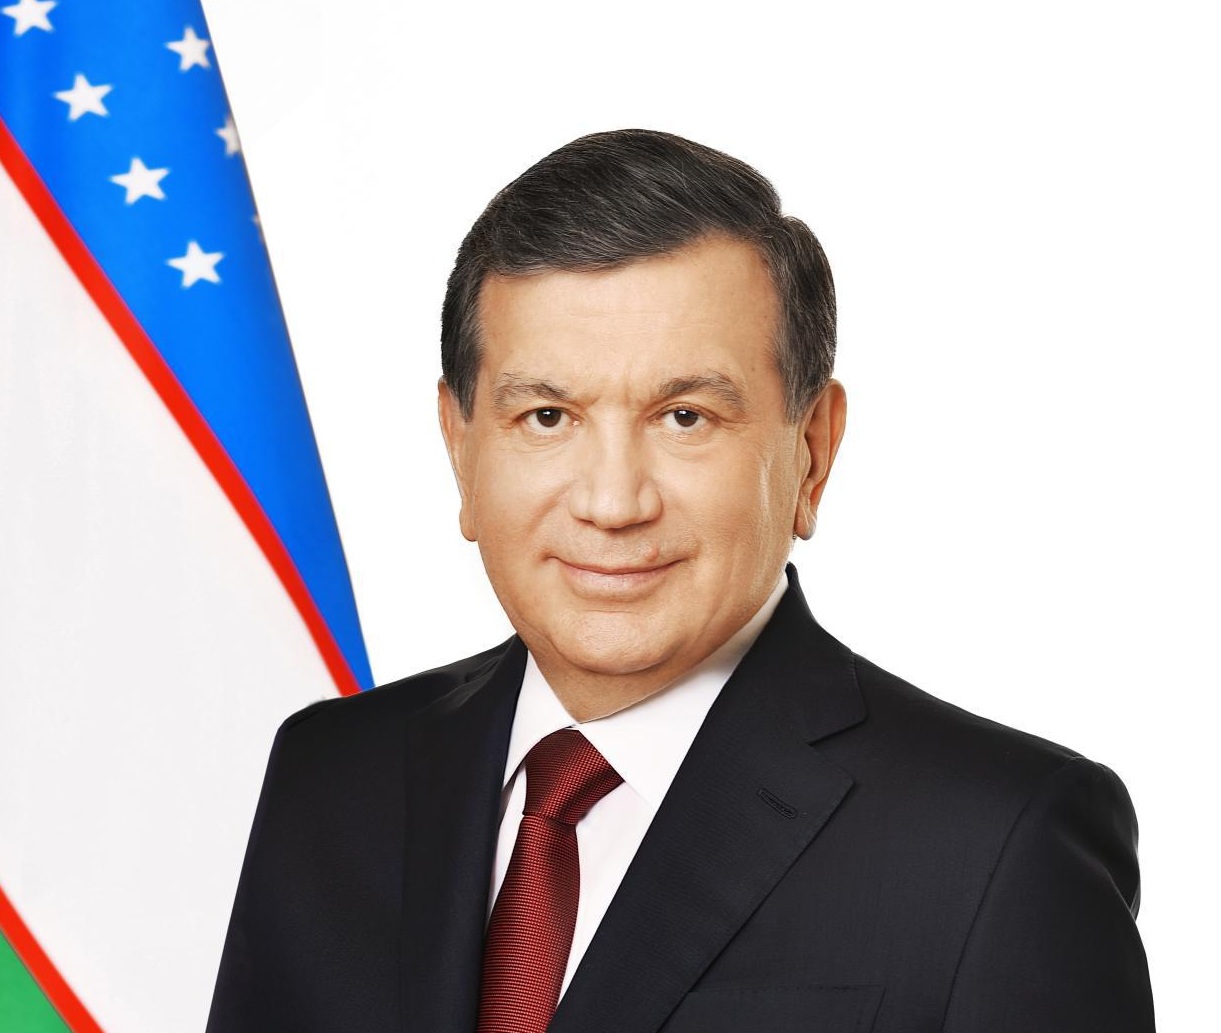 New Year greetings of the President of the Republic of Uzbekistan Shavkat Mirziyoyev to people of Uzbekistan